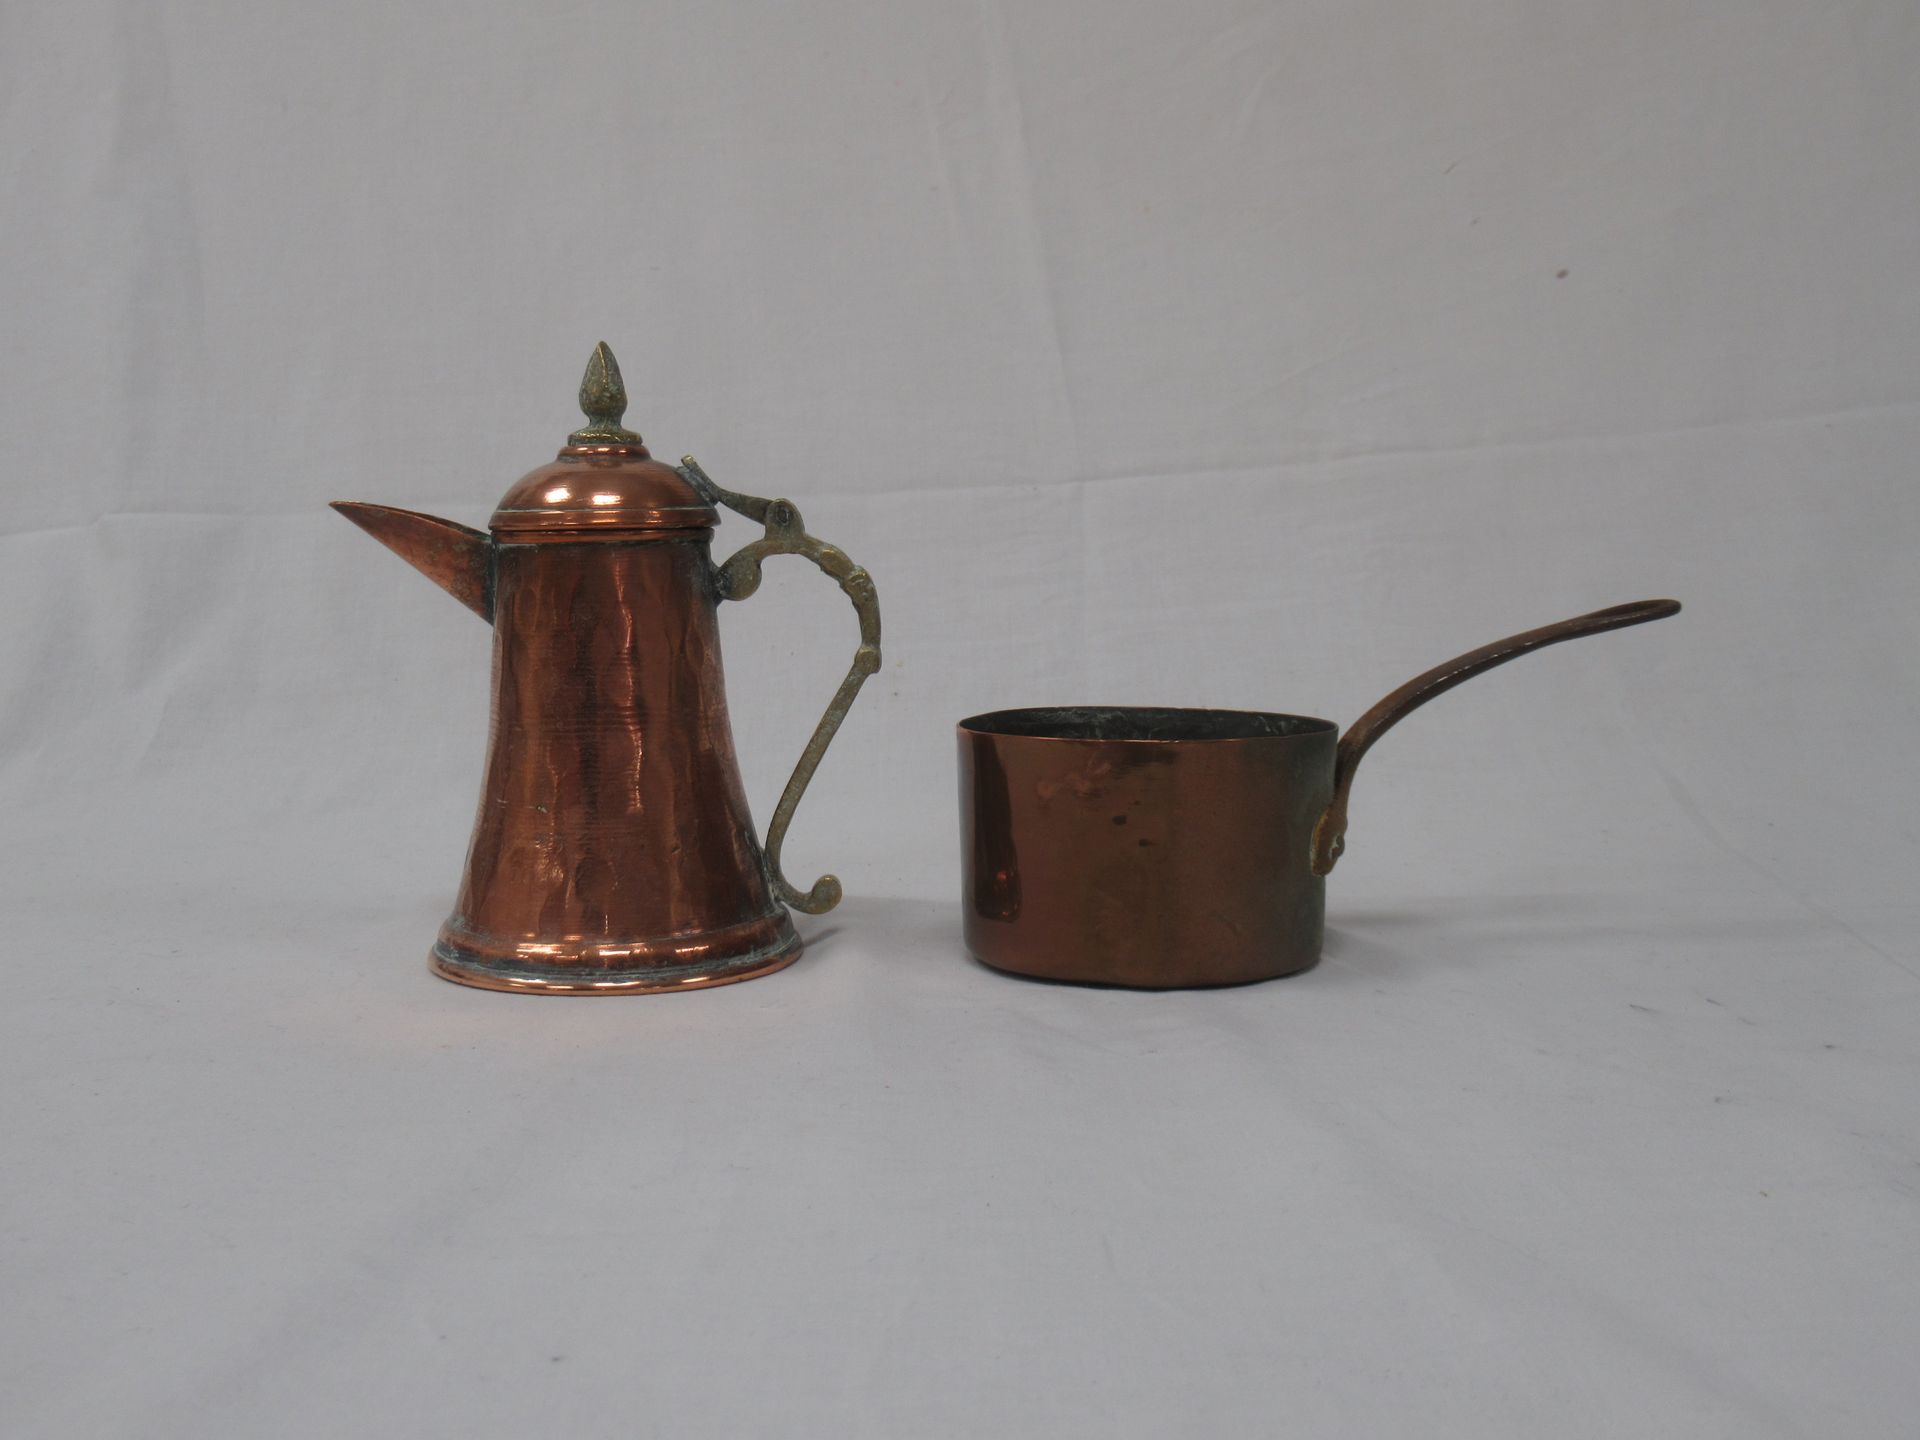 Null 铜制套装包括一个小壶和一个水壶。从10到16厘米。